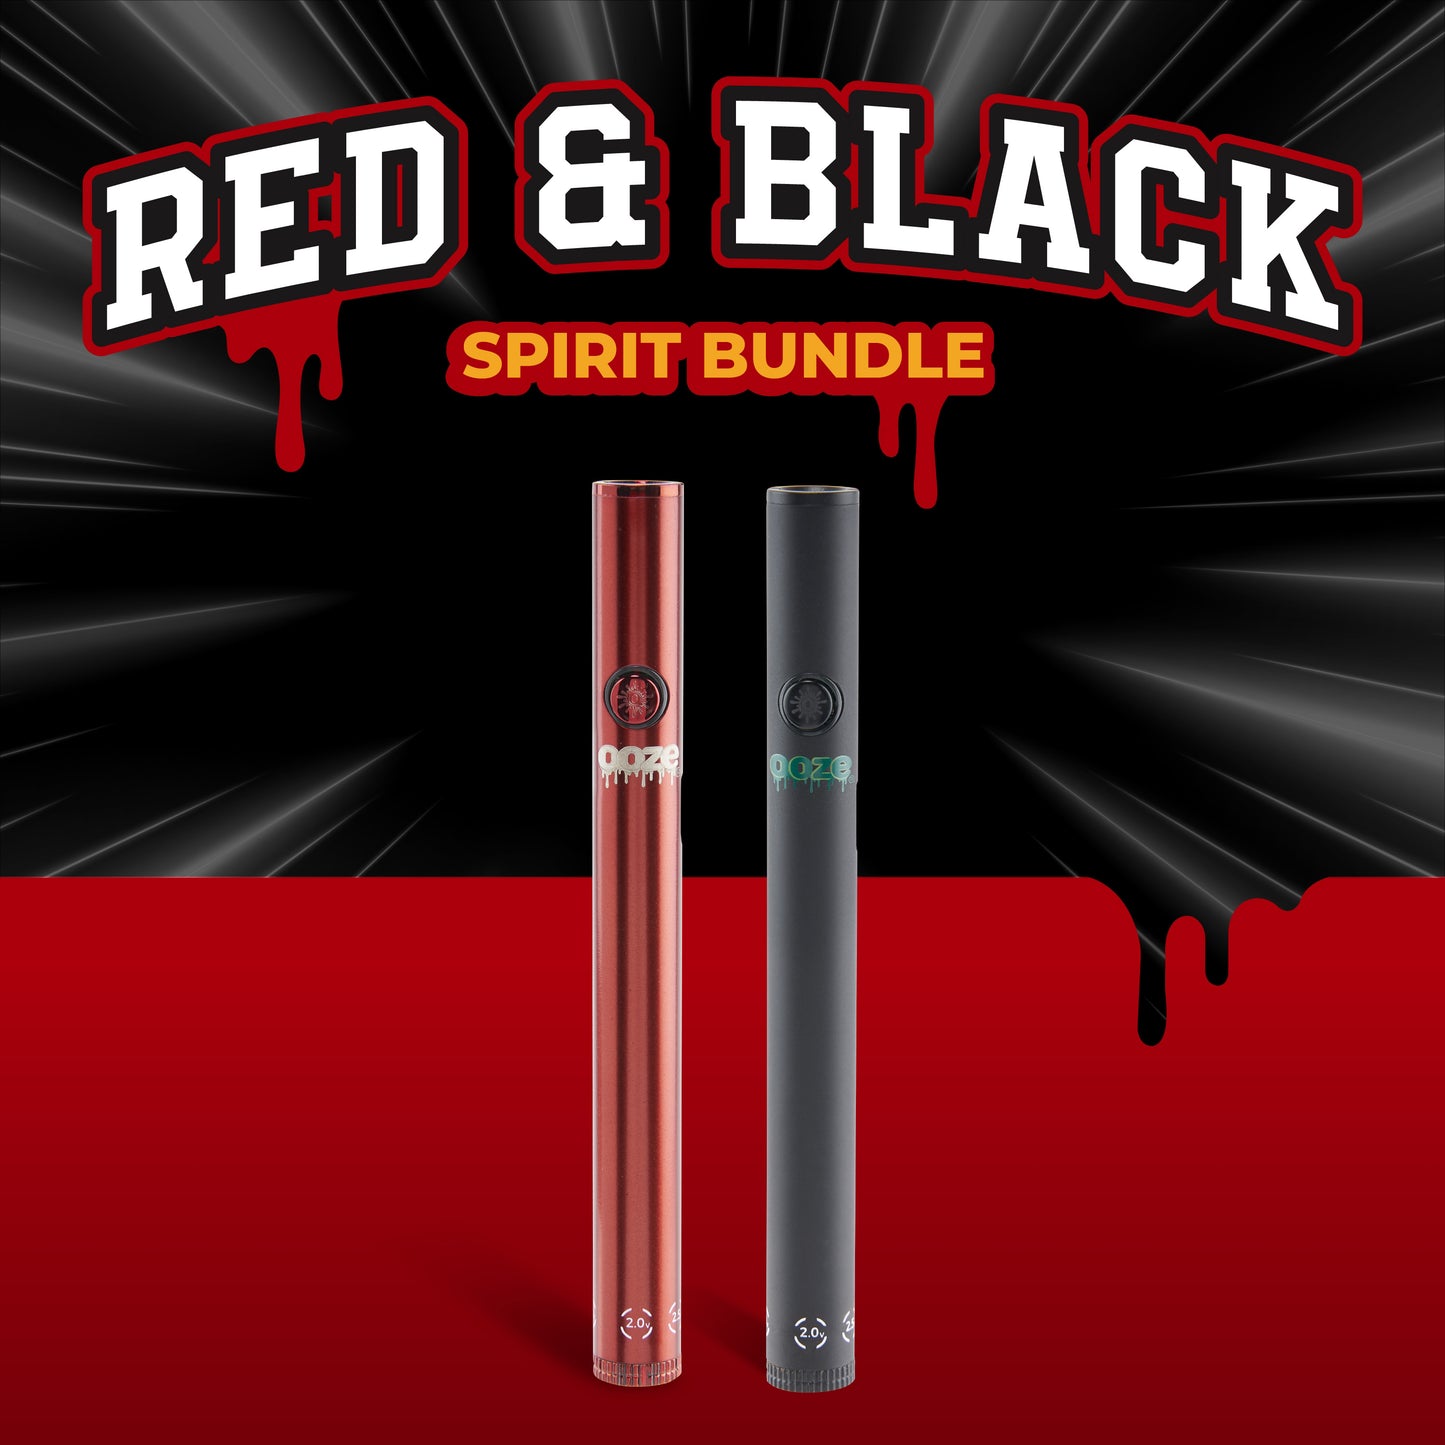 Red and Black Spirit Bundle